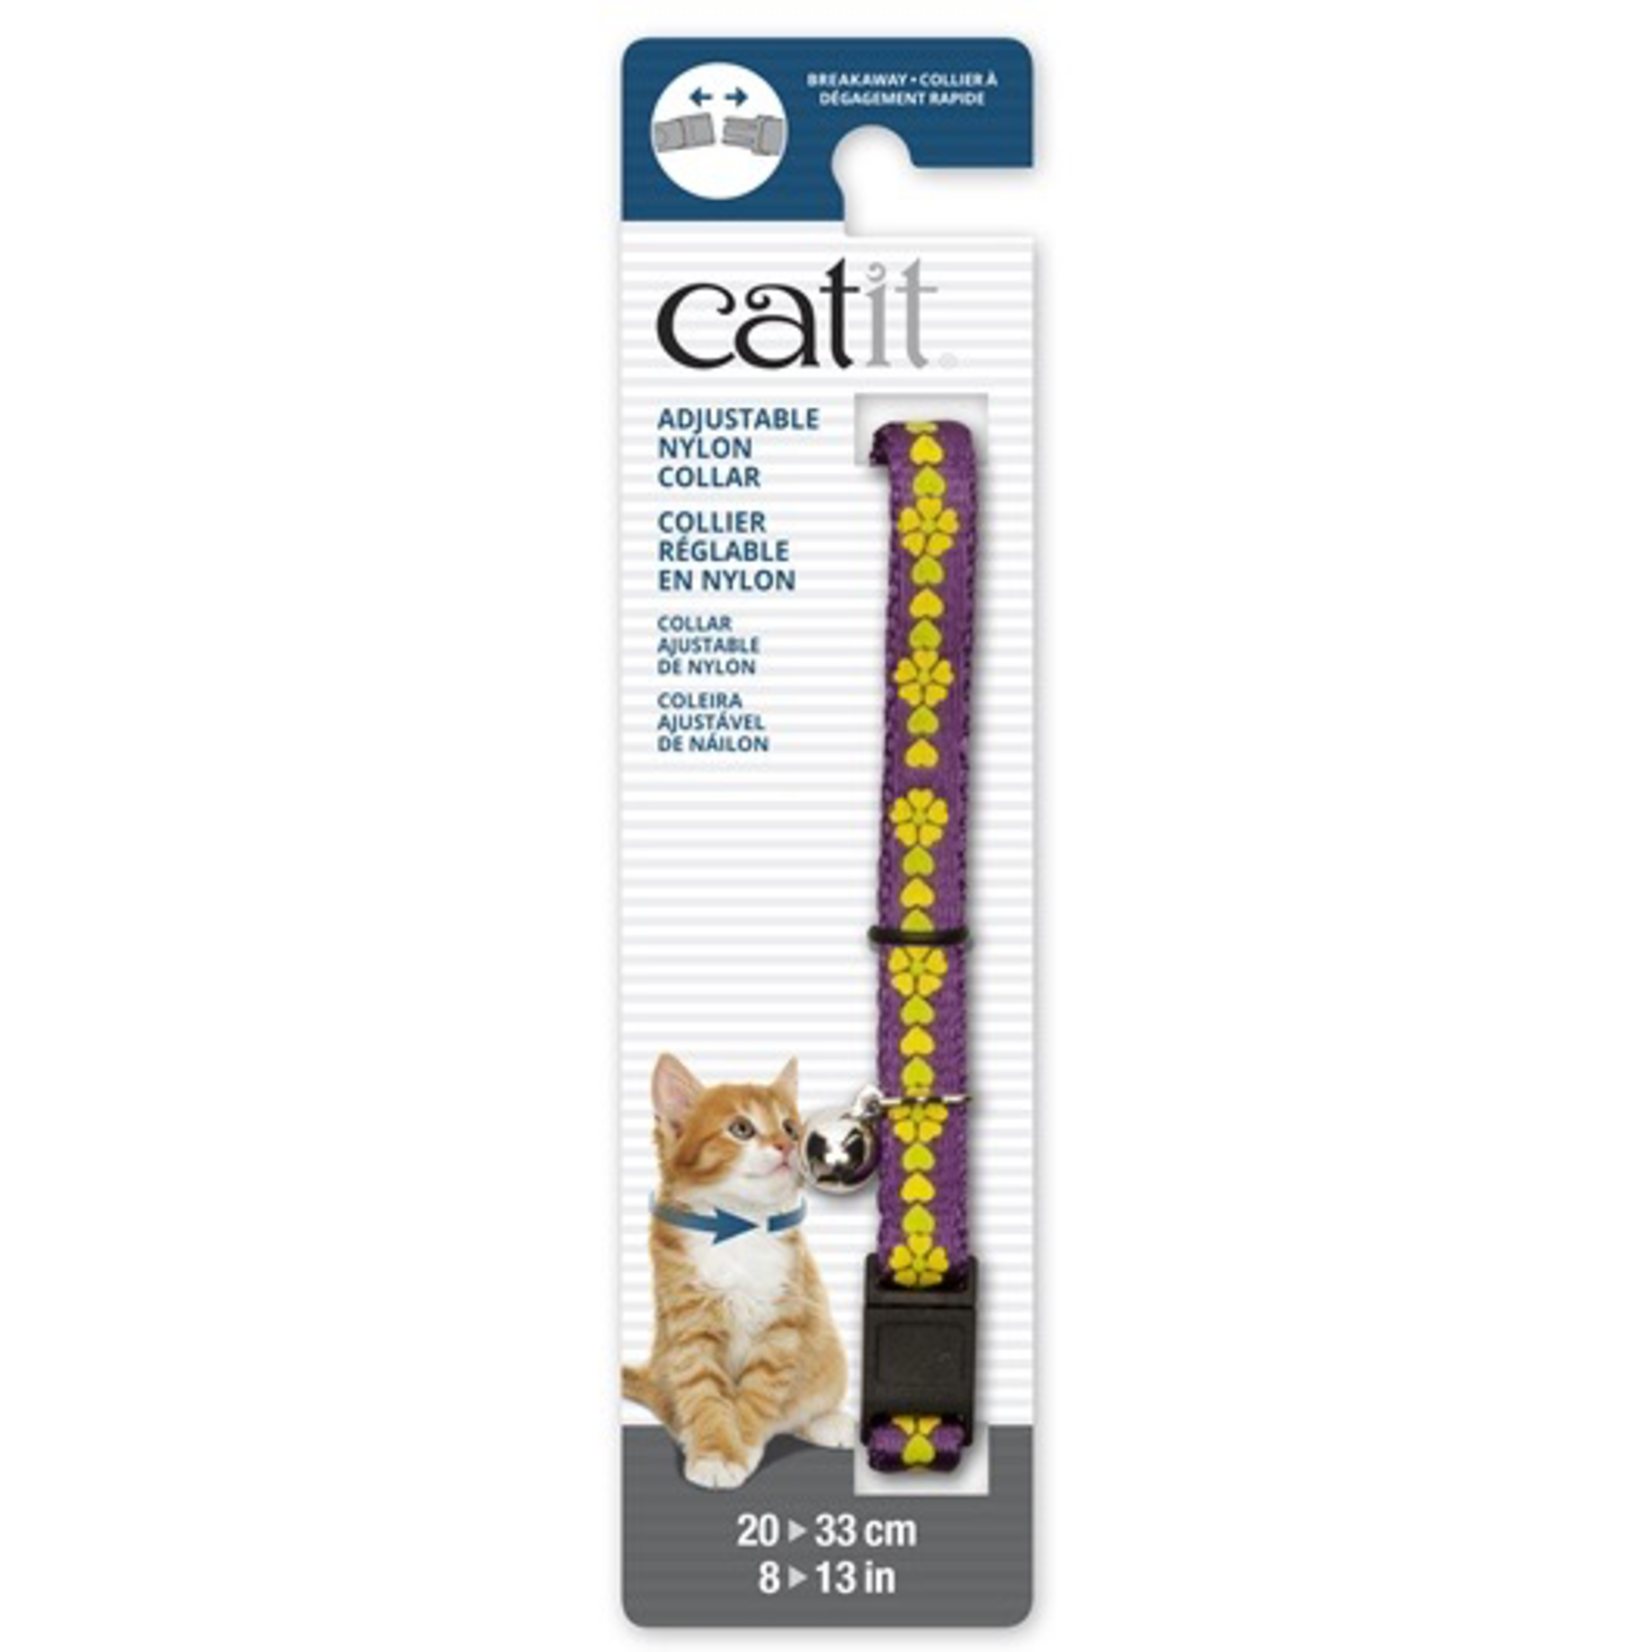 CAT IT Catit Adjustable Breakaway Nylon Collar - Purple with Flowers - 20-33 cm (8-13 in)